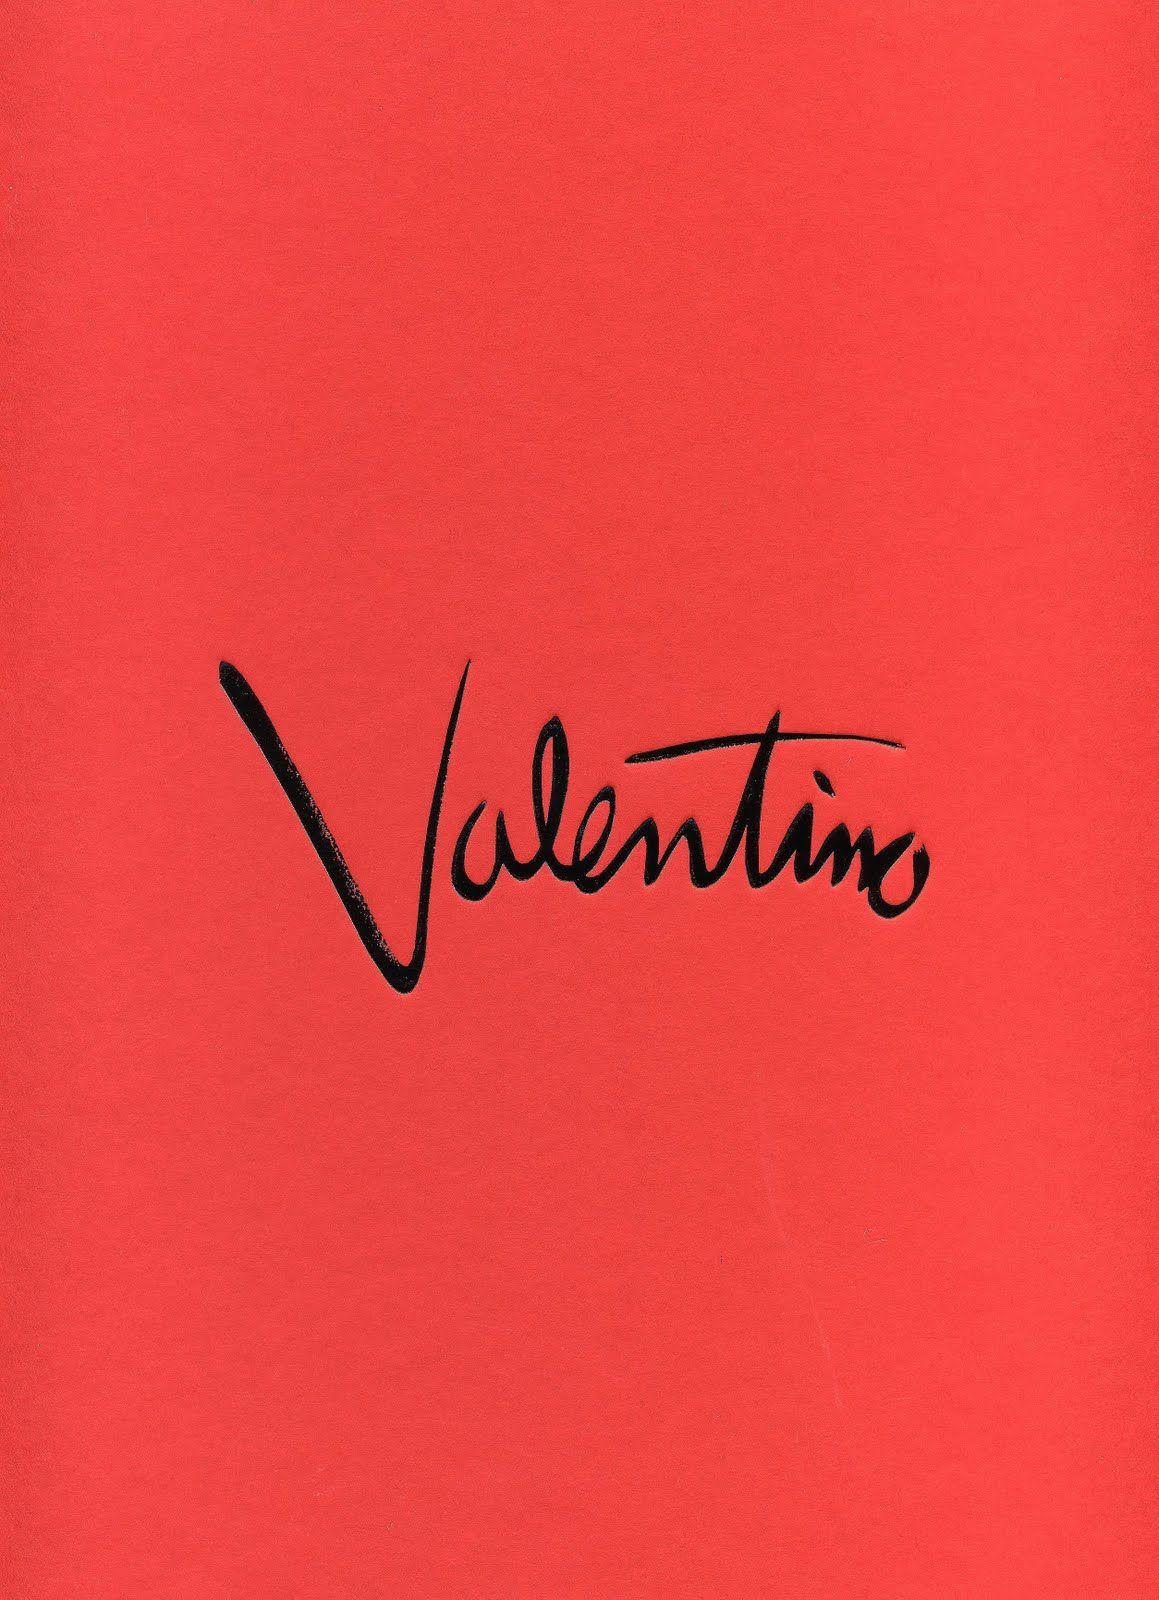 Valentino Logo - LogoDix